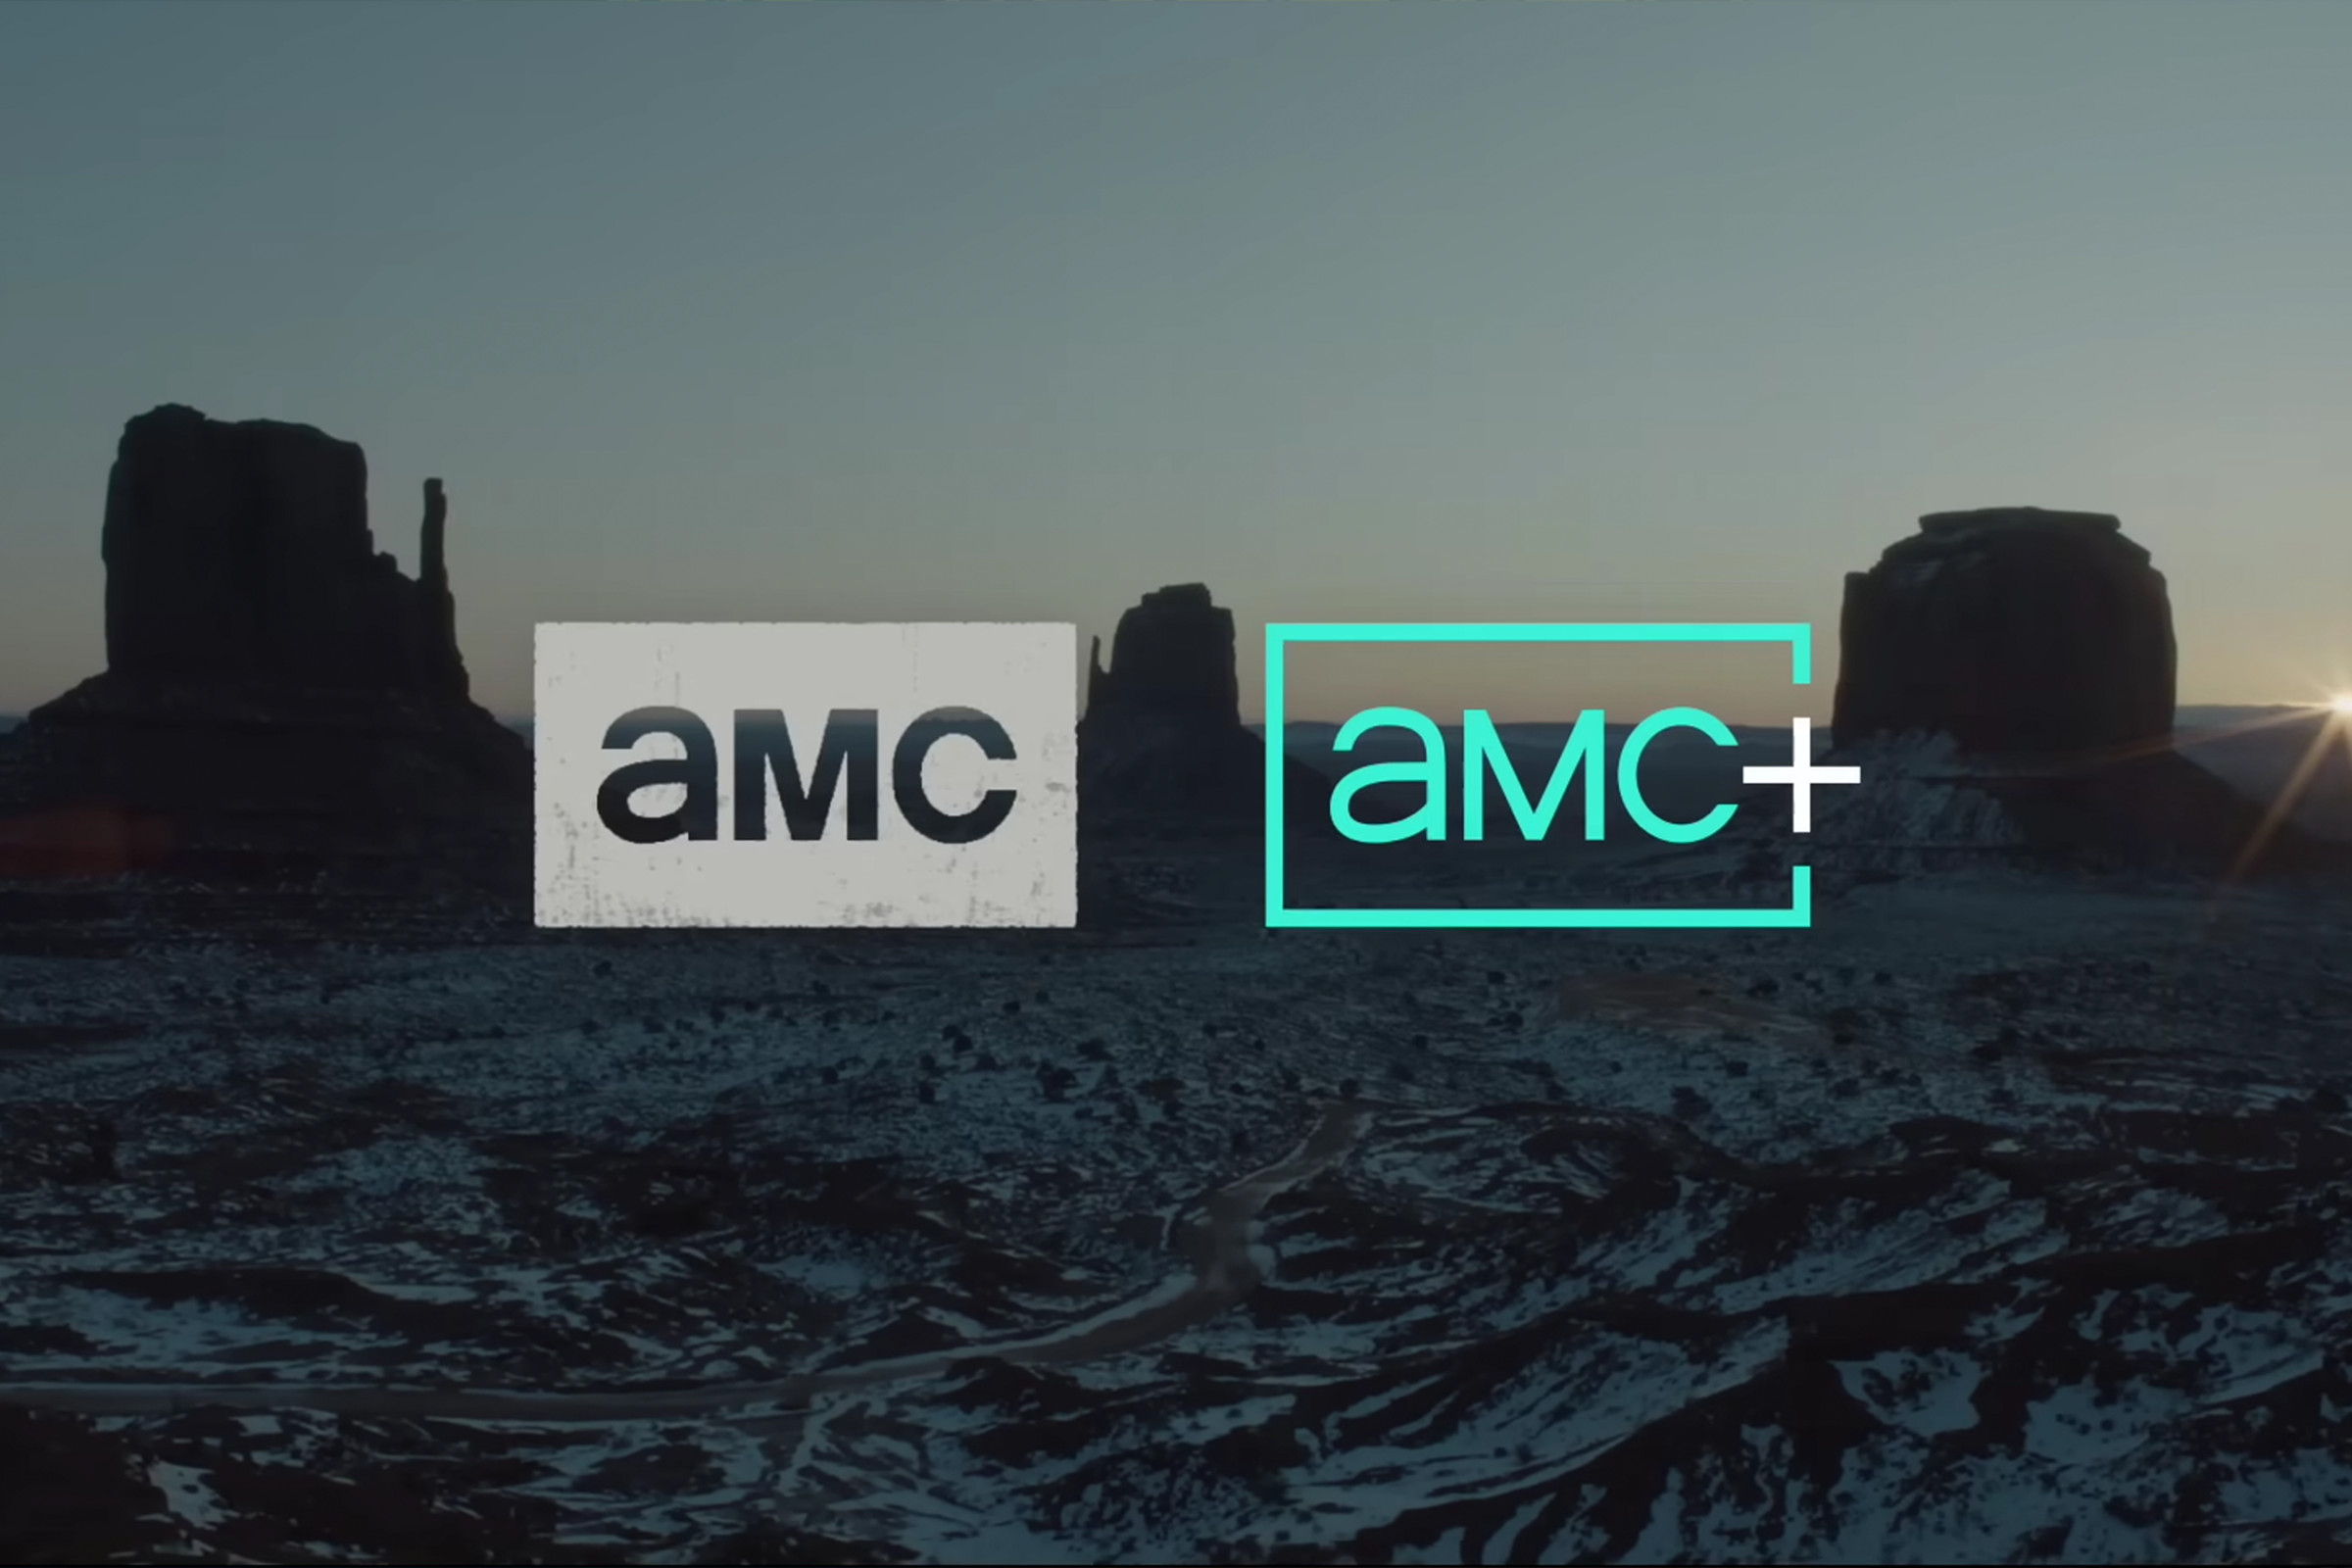 A screenshot of the AMC logo next to the AMC Plus logo on a dark background.